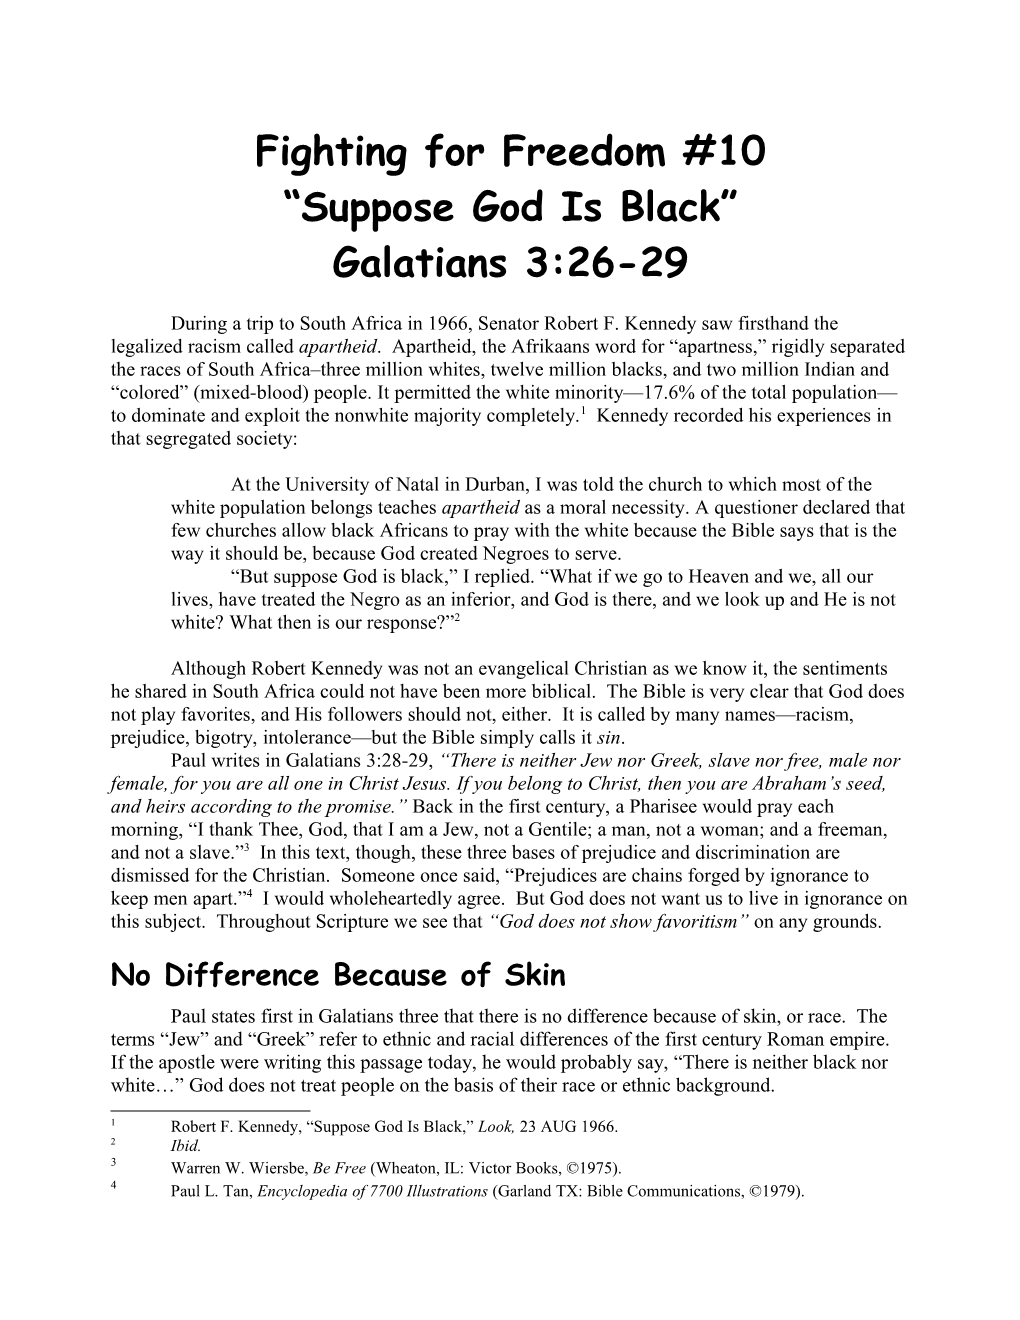 Suppose God Is Black